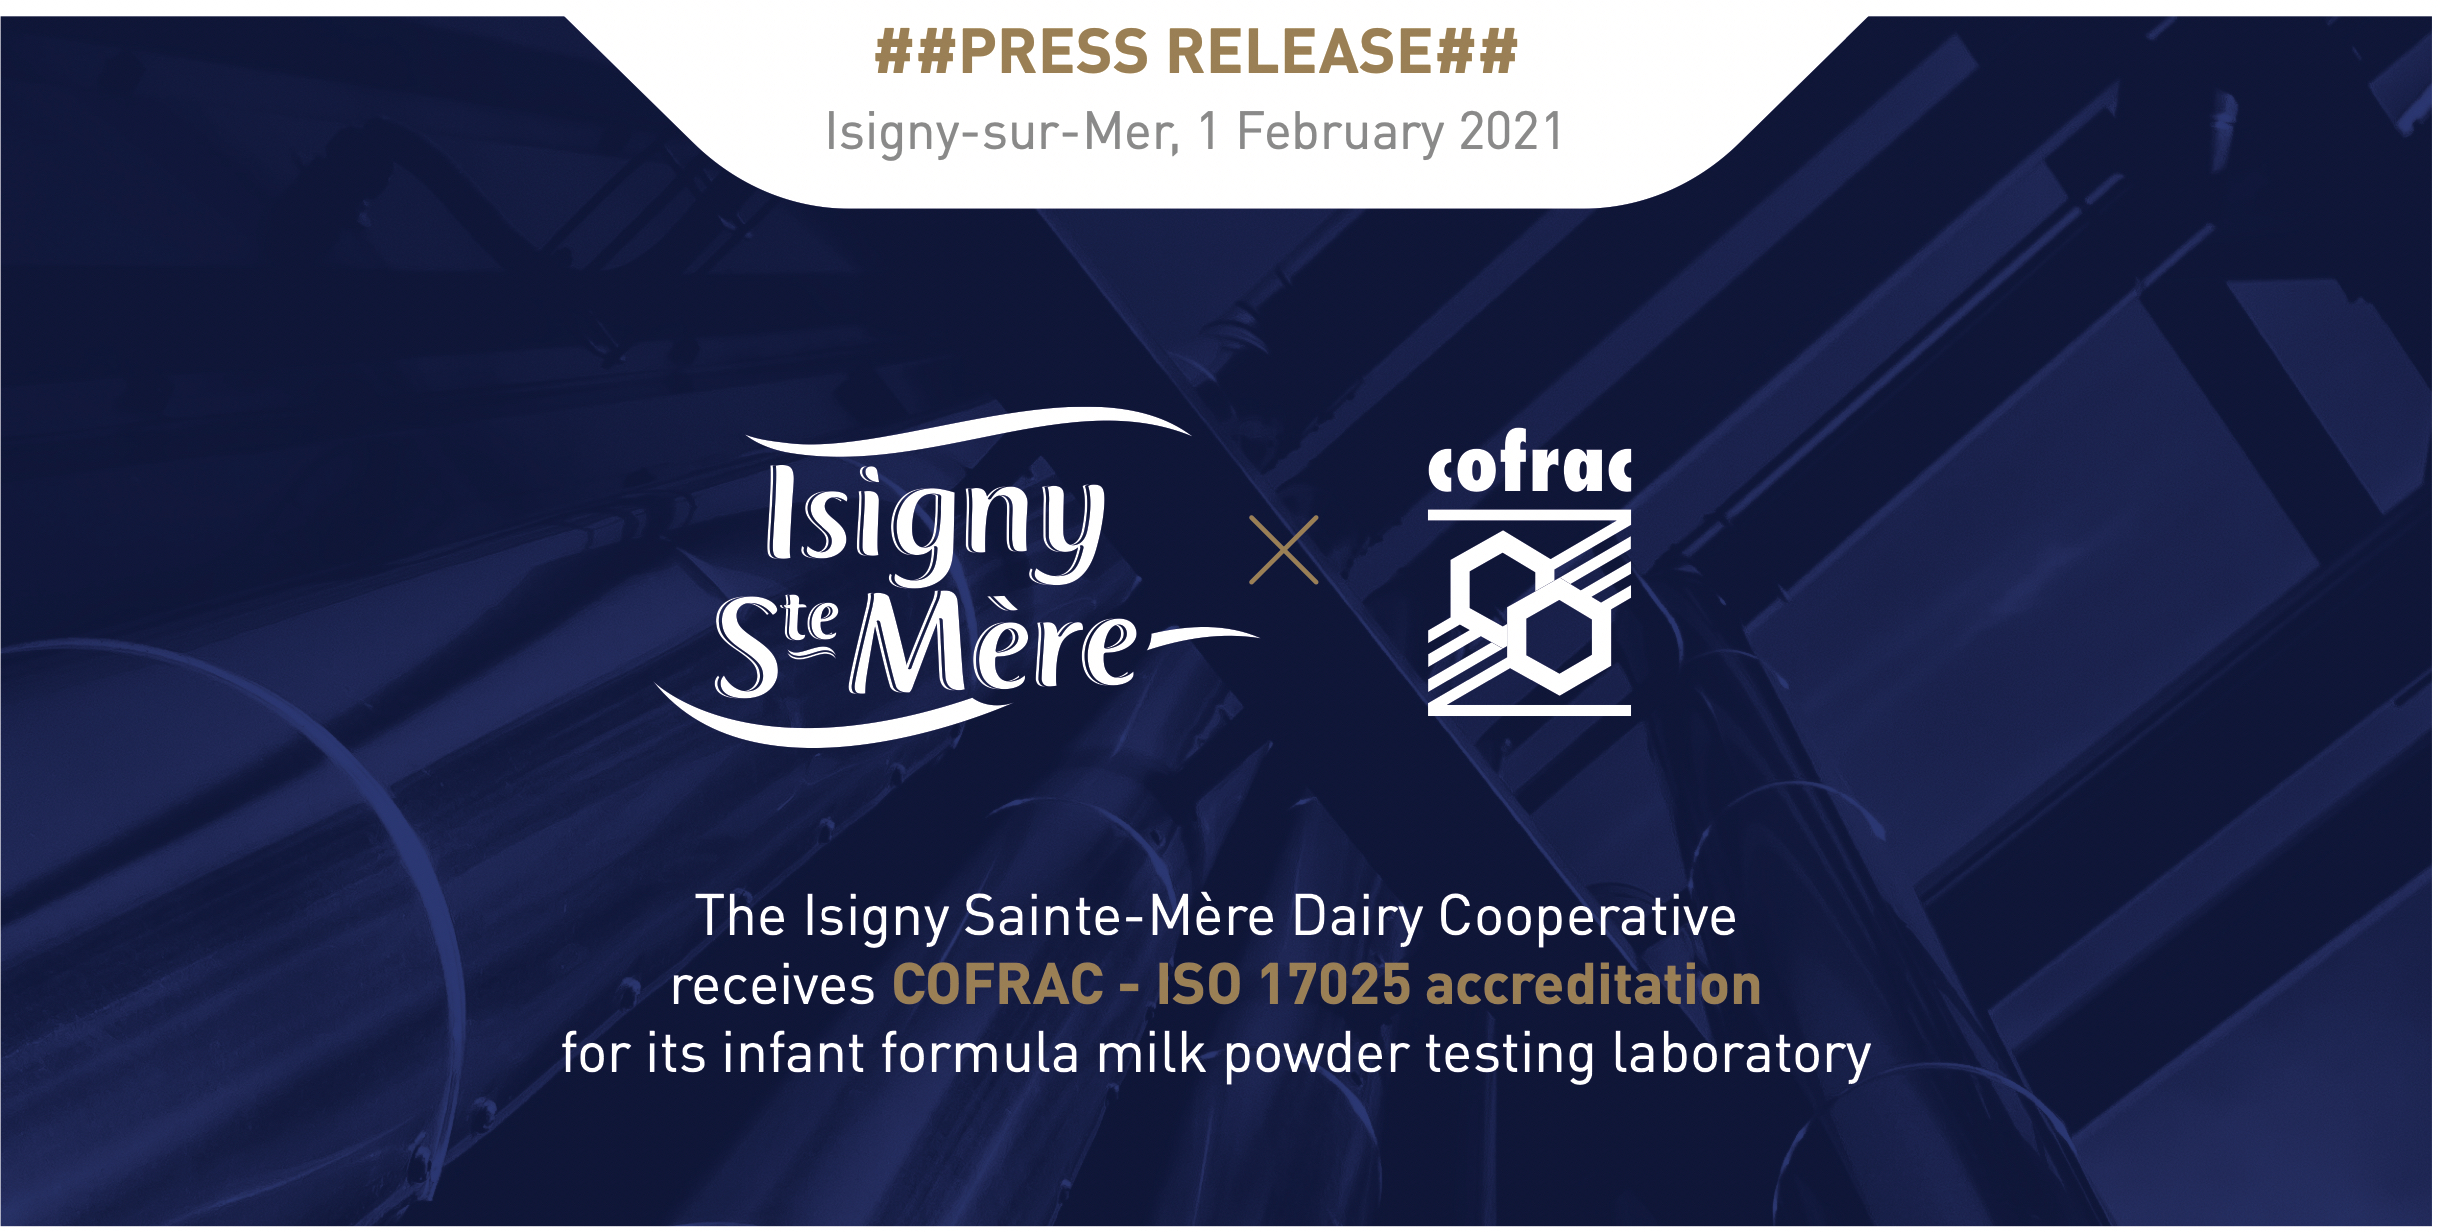 Isigny Ste Mère Infant milk formula testing laboratory has recently received COFRAC ISO 17025 accreditation